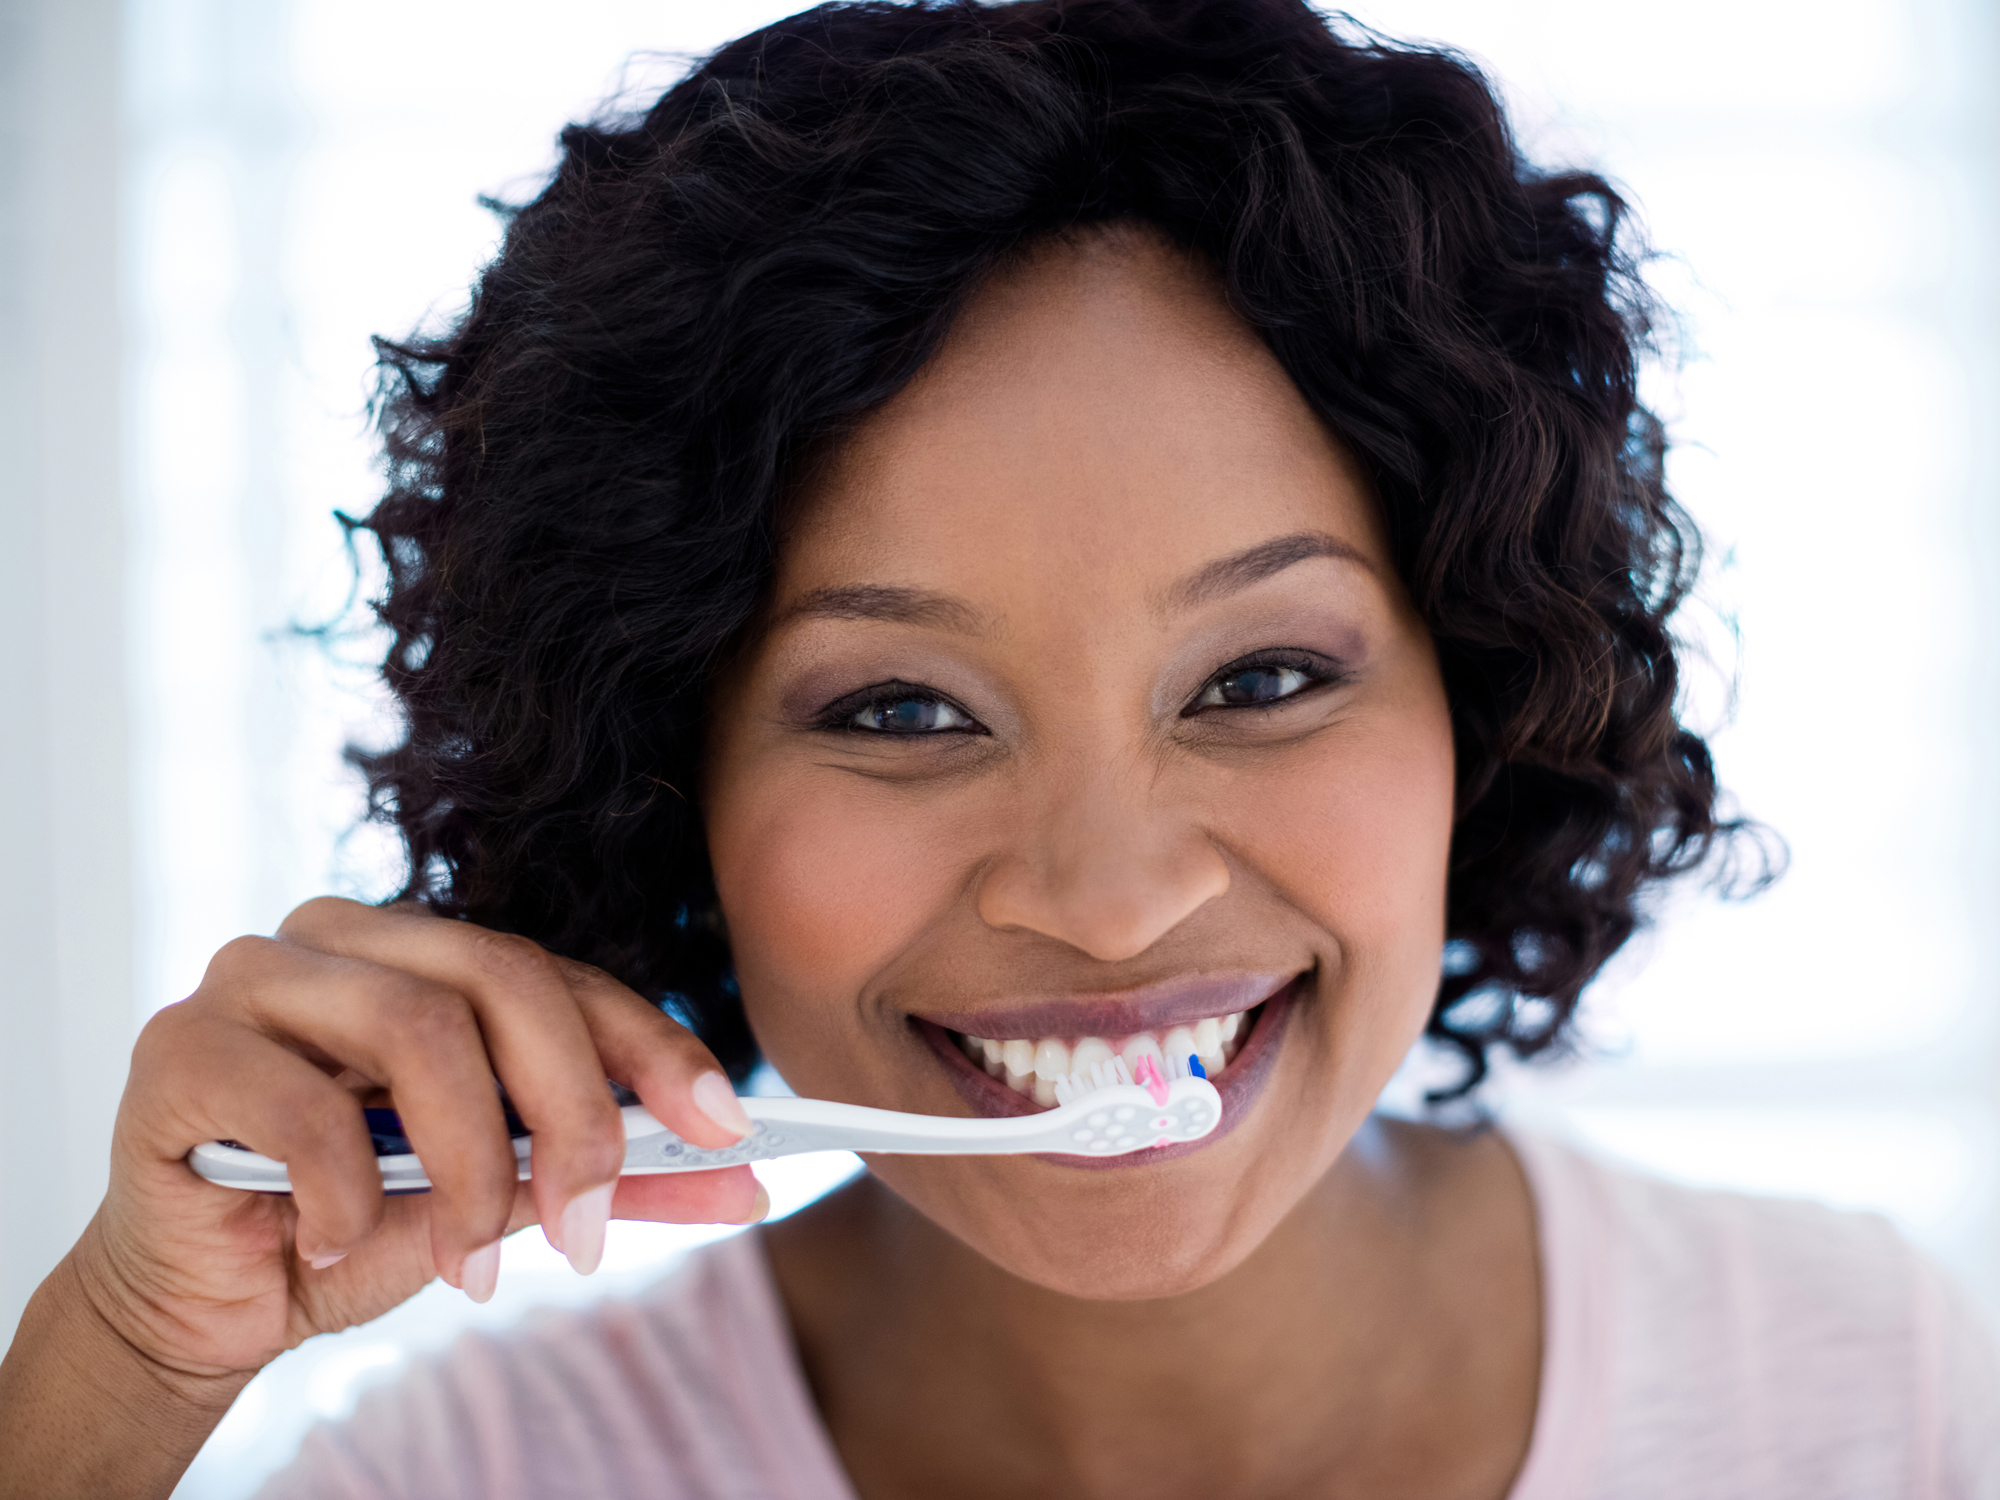 The ‘healthy’ dental habit that destroys your thyroid